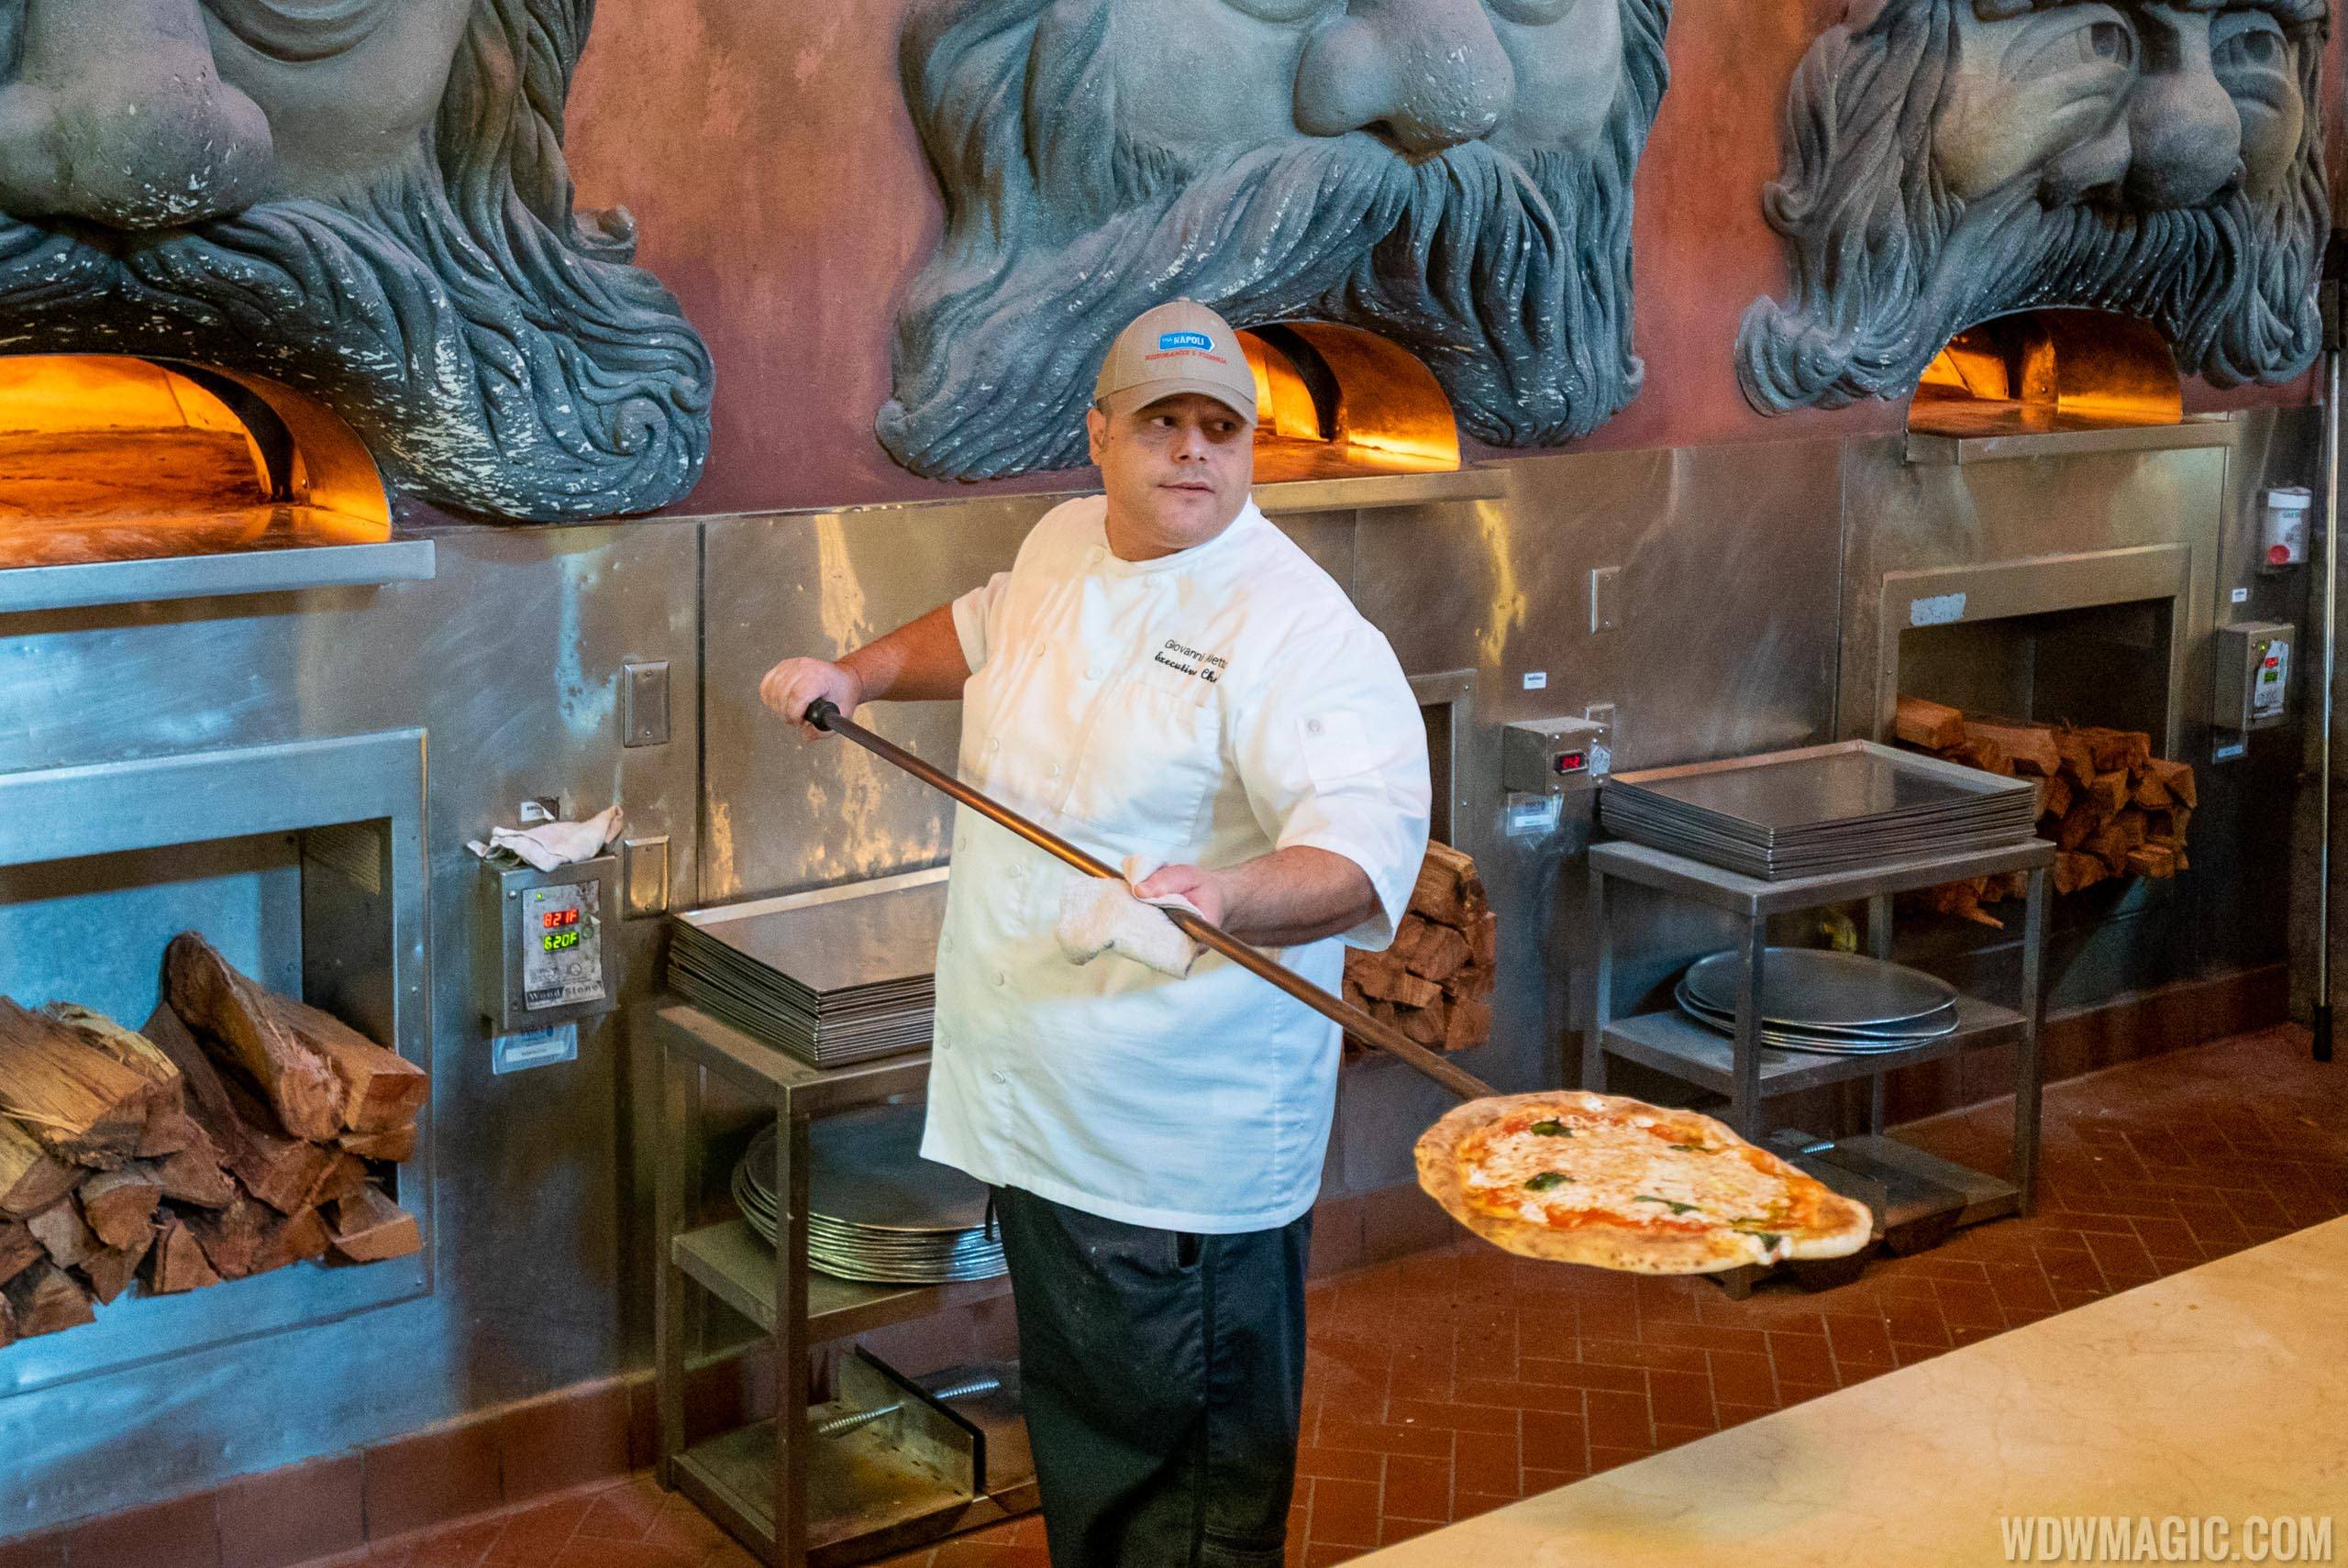 Via Napoli Executive Chef Giovanni Aletto displays the perfect pizza fresh from the oven